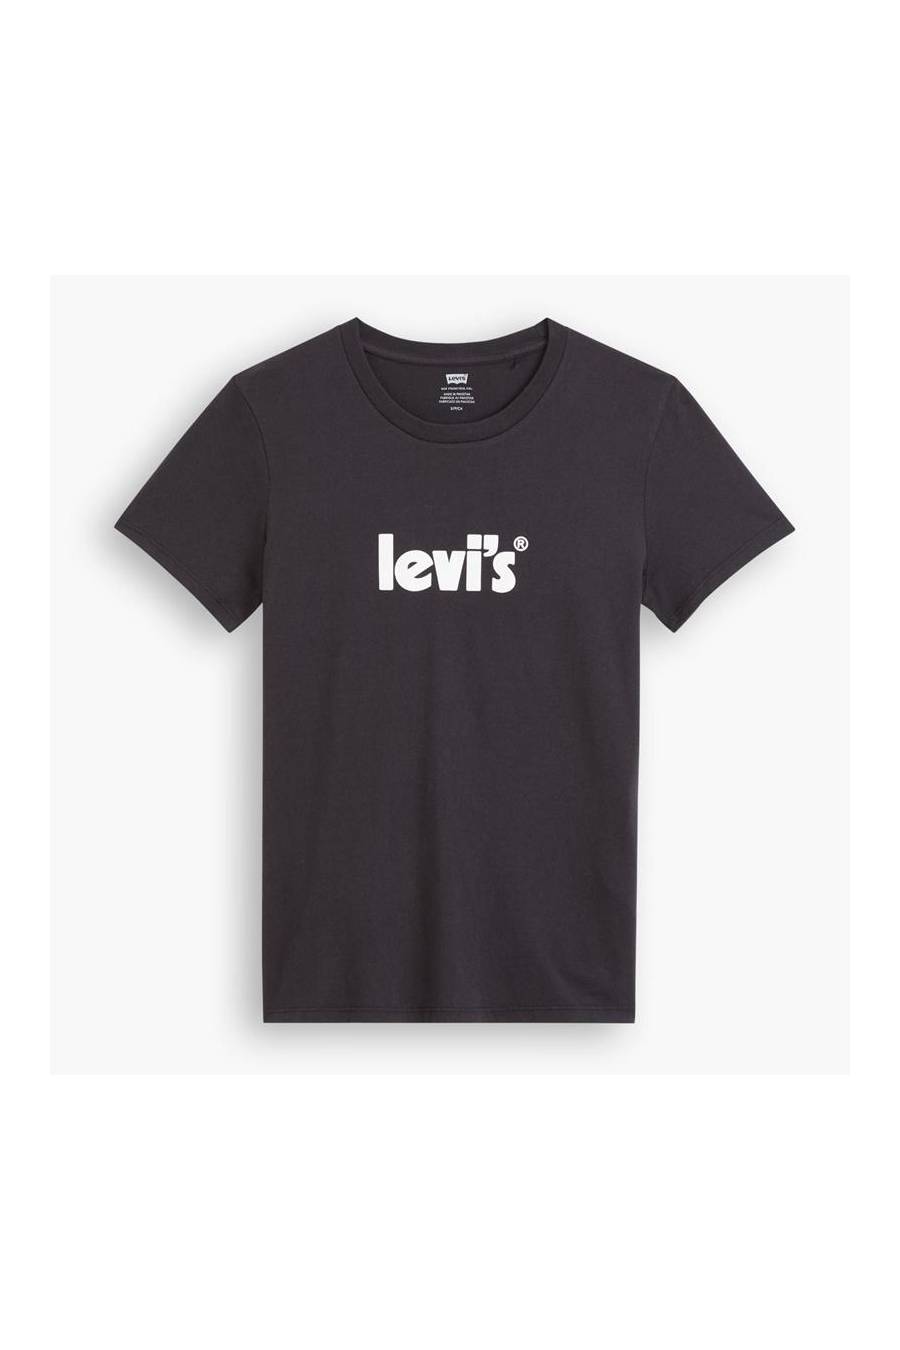 Camiseta Levi's Perfect Tee Seasonal  17369-1756